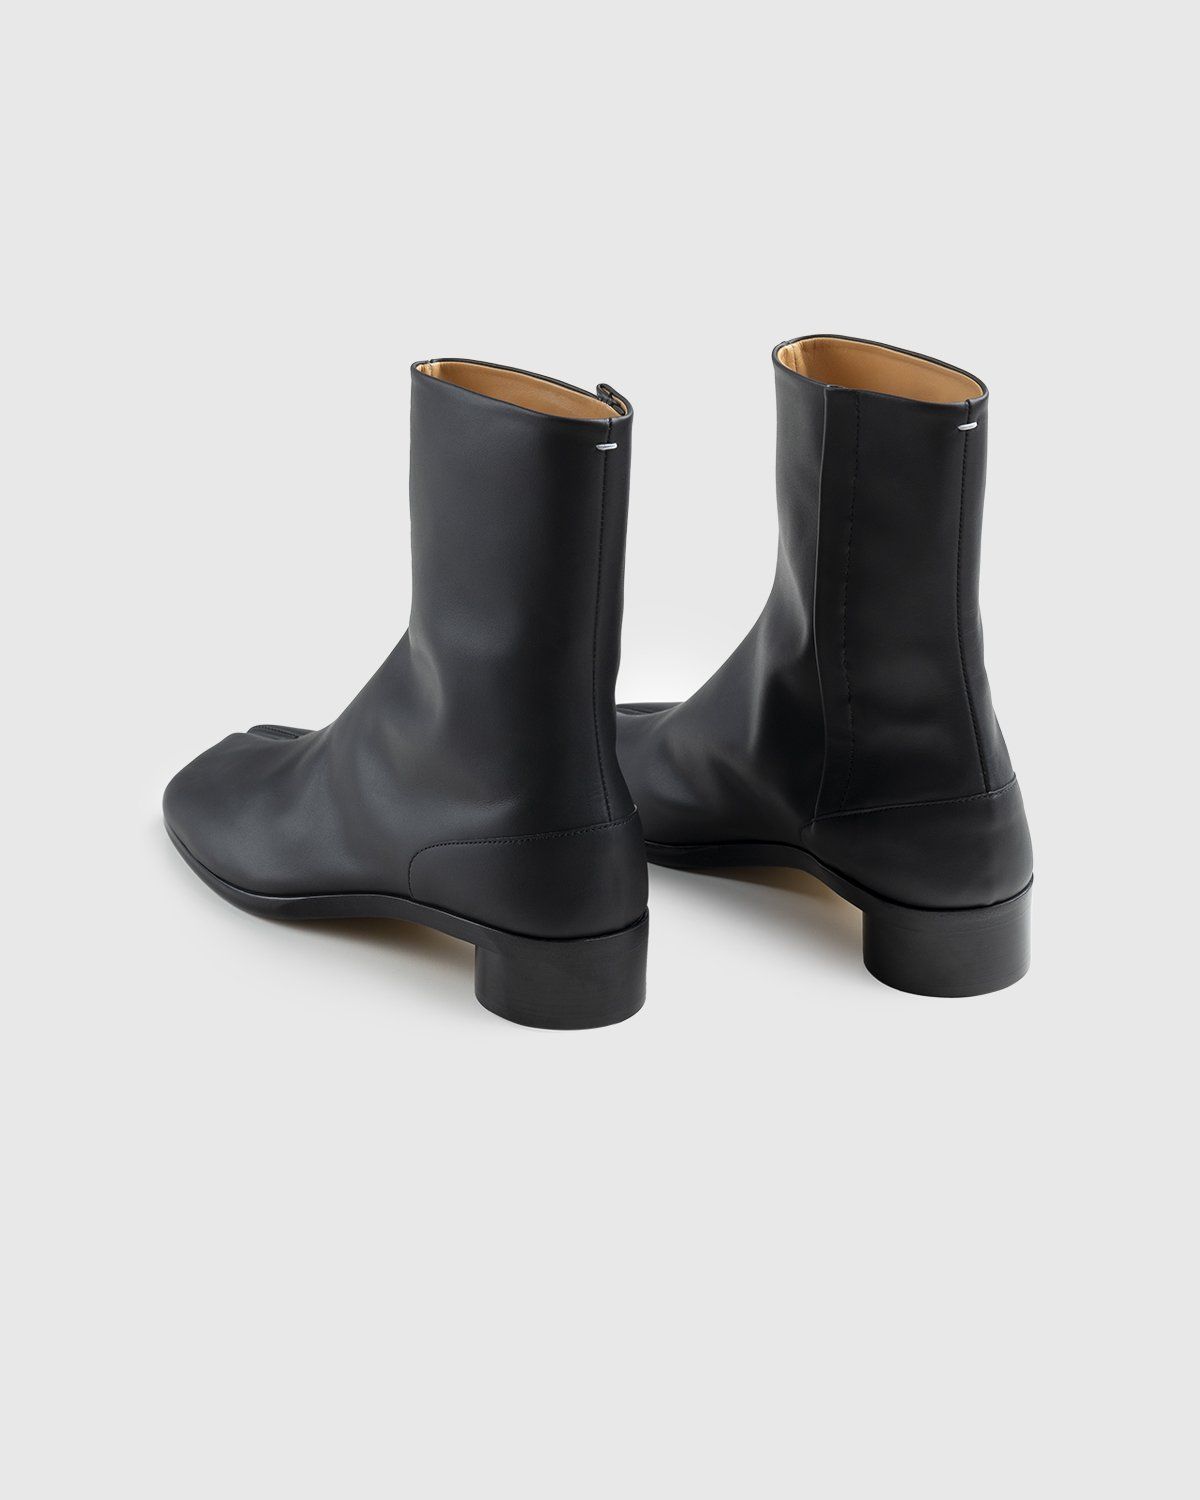 Maison Margiela – Tabi Ankle Boot Black | Highsnobiety Shop